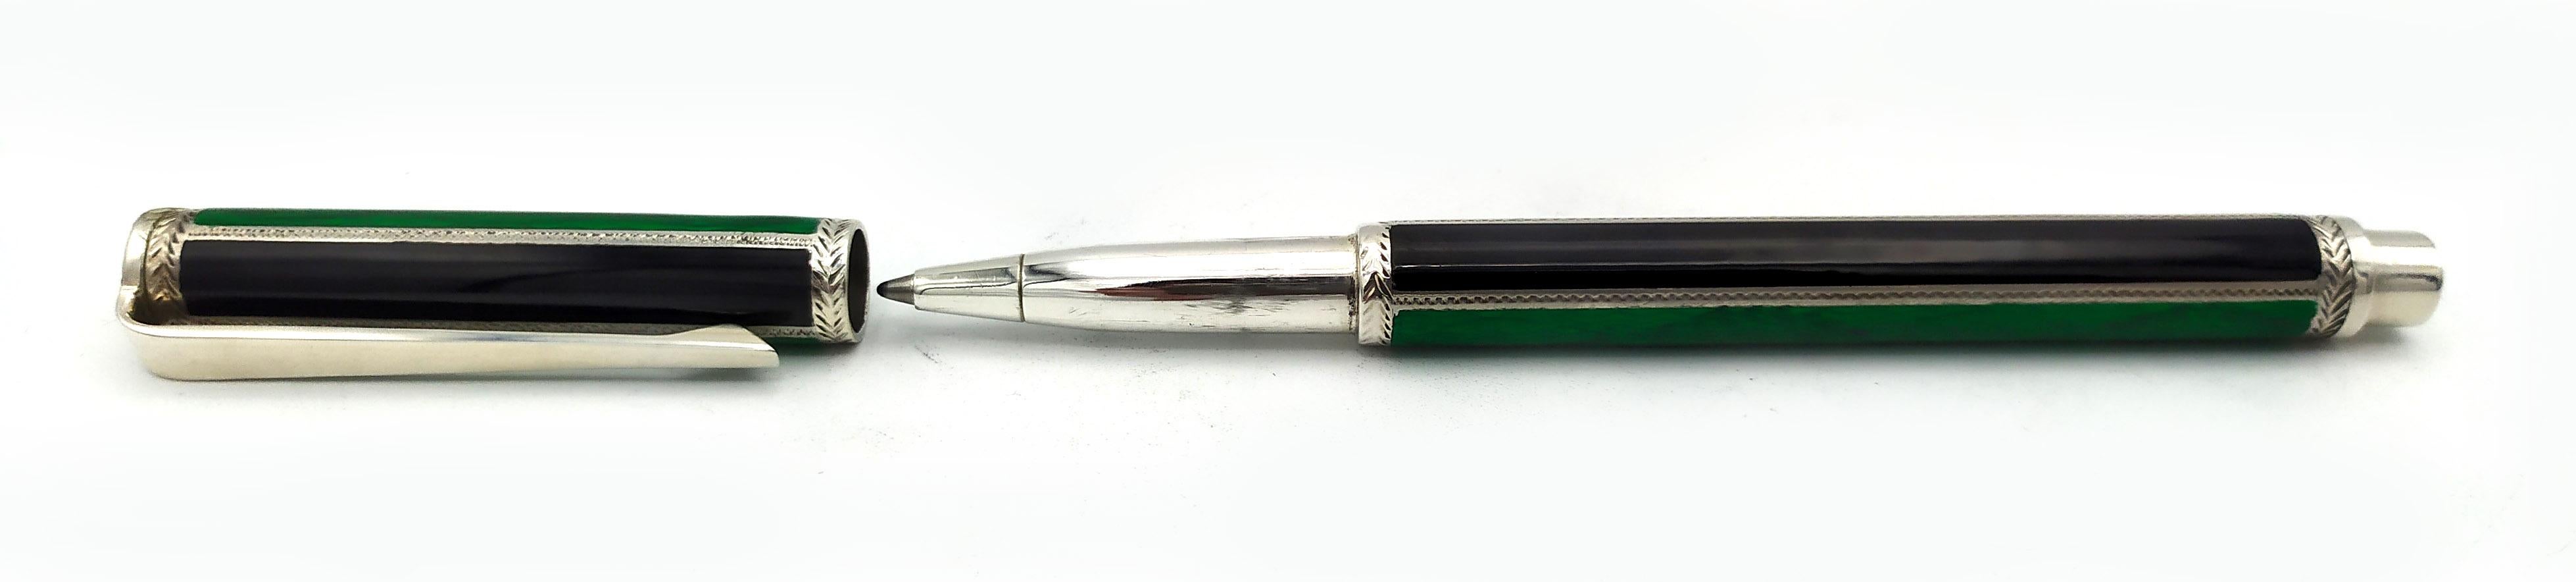 Fountain pen, Ballpoint pen and tray for a Desk Set green enamel Salimbeni  For Sale 7